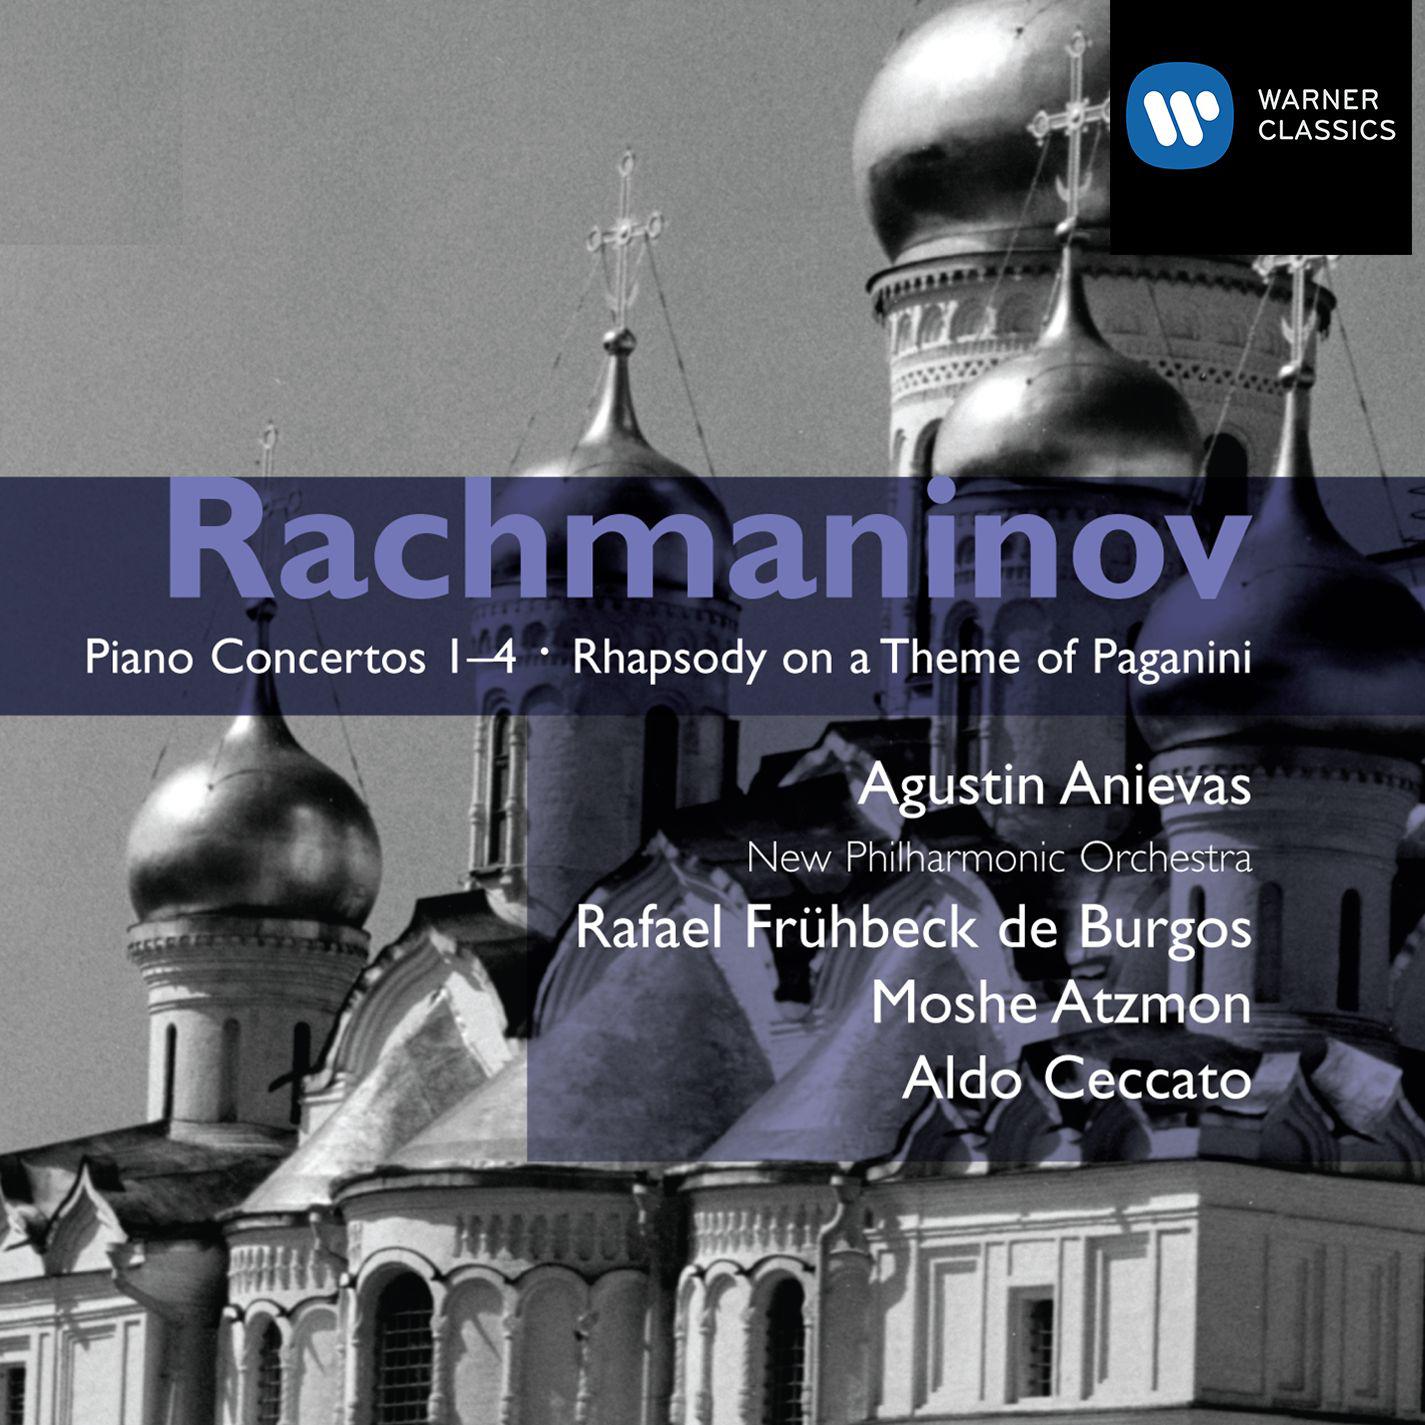 Rhapsody on a Theme of Paganini, Op. 43:Variation IX. L'istesso tempo